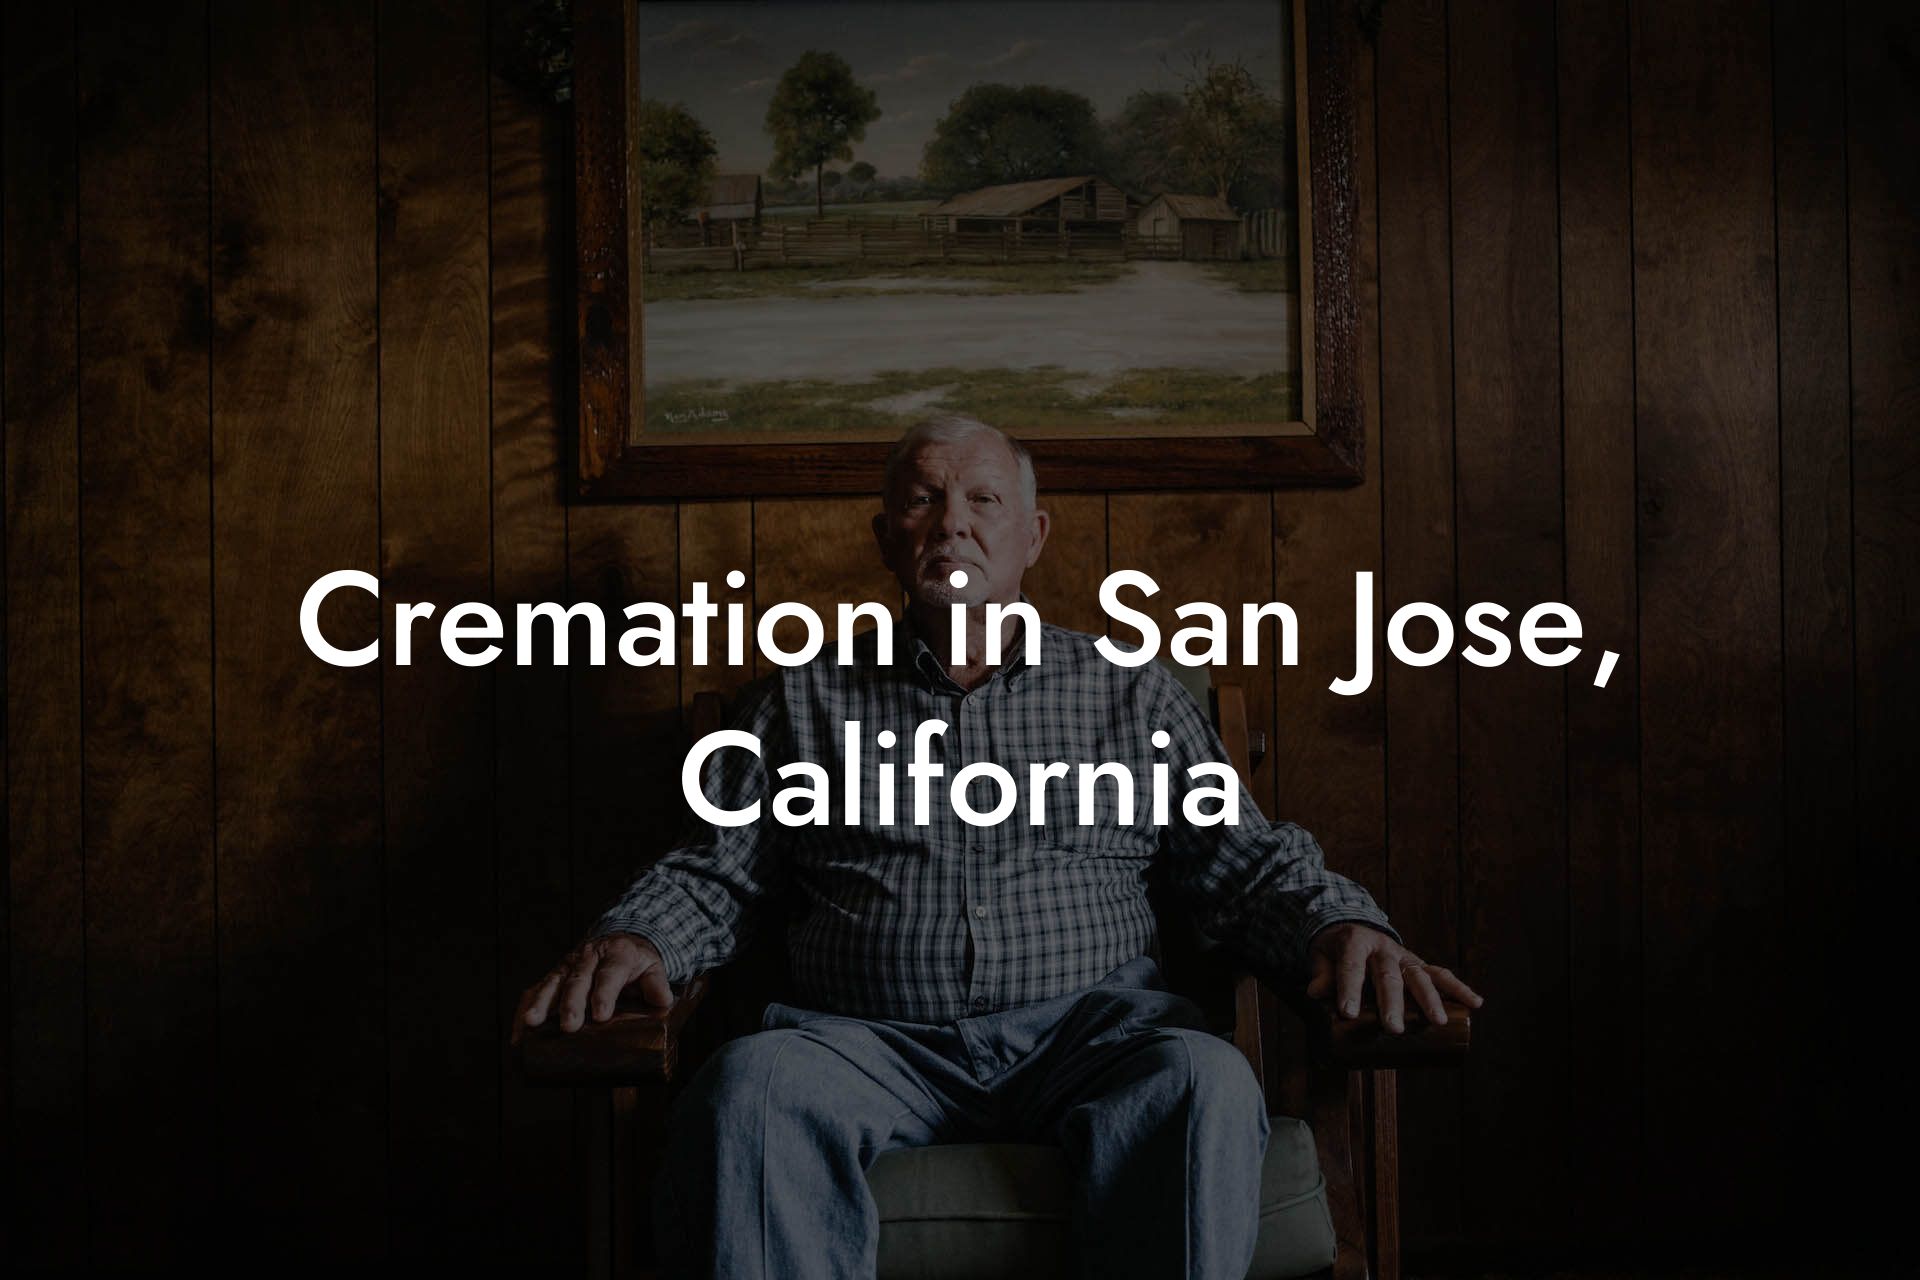 Cremation in San Jose, California